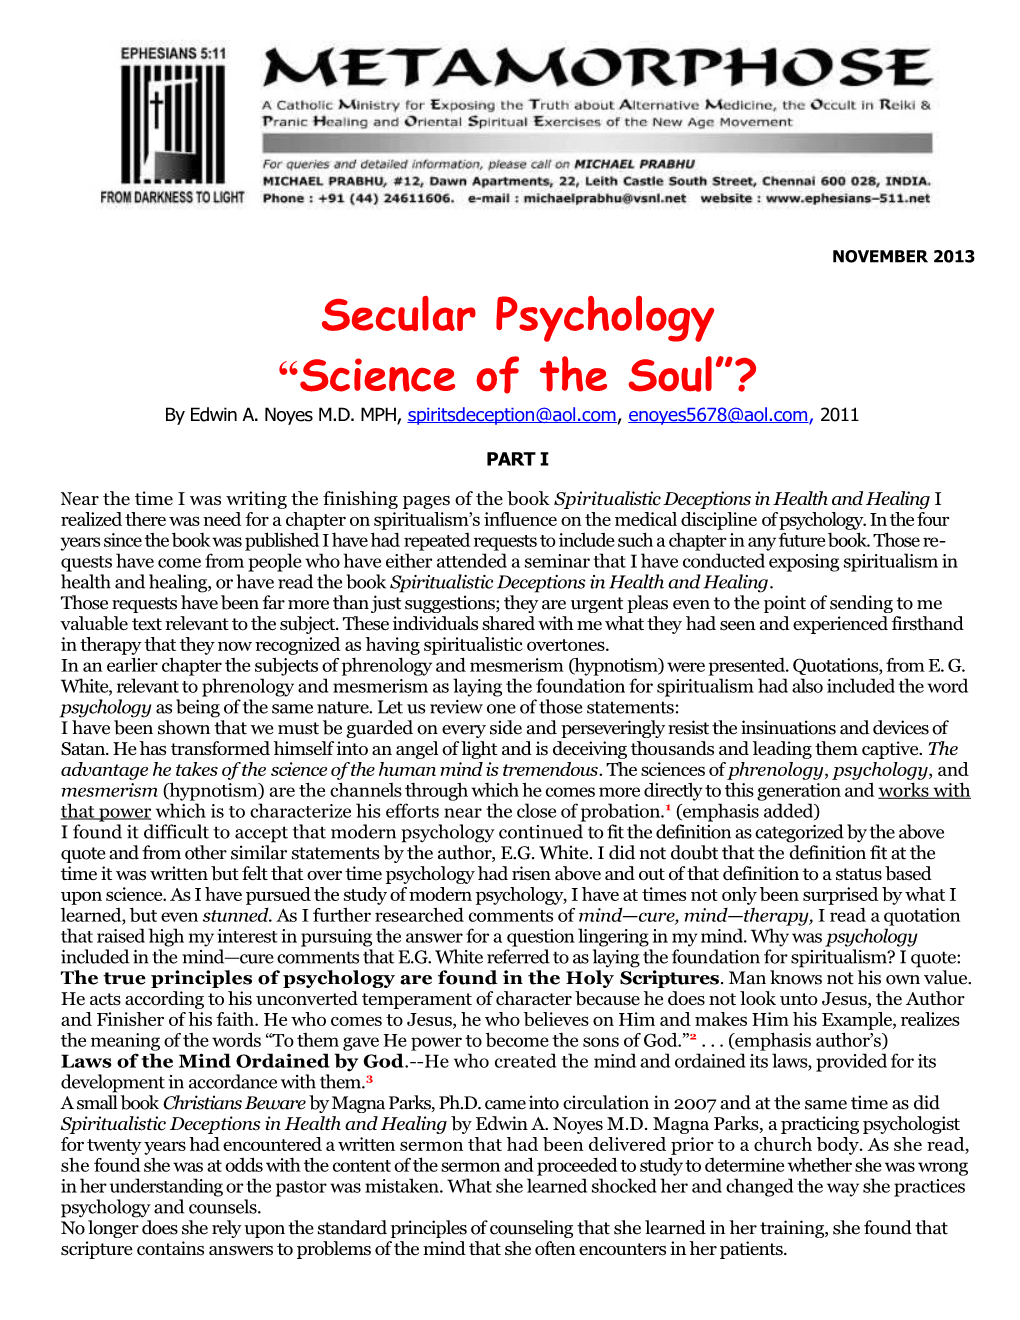 Secular Psychology